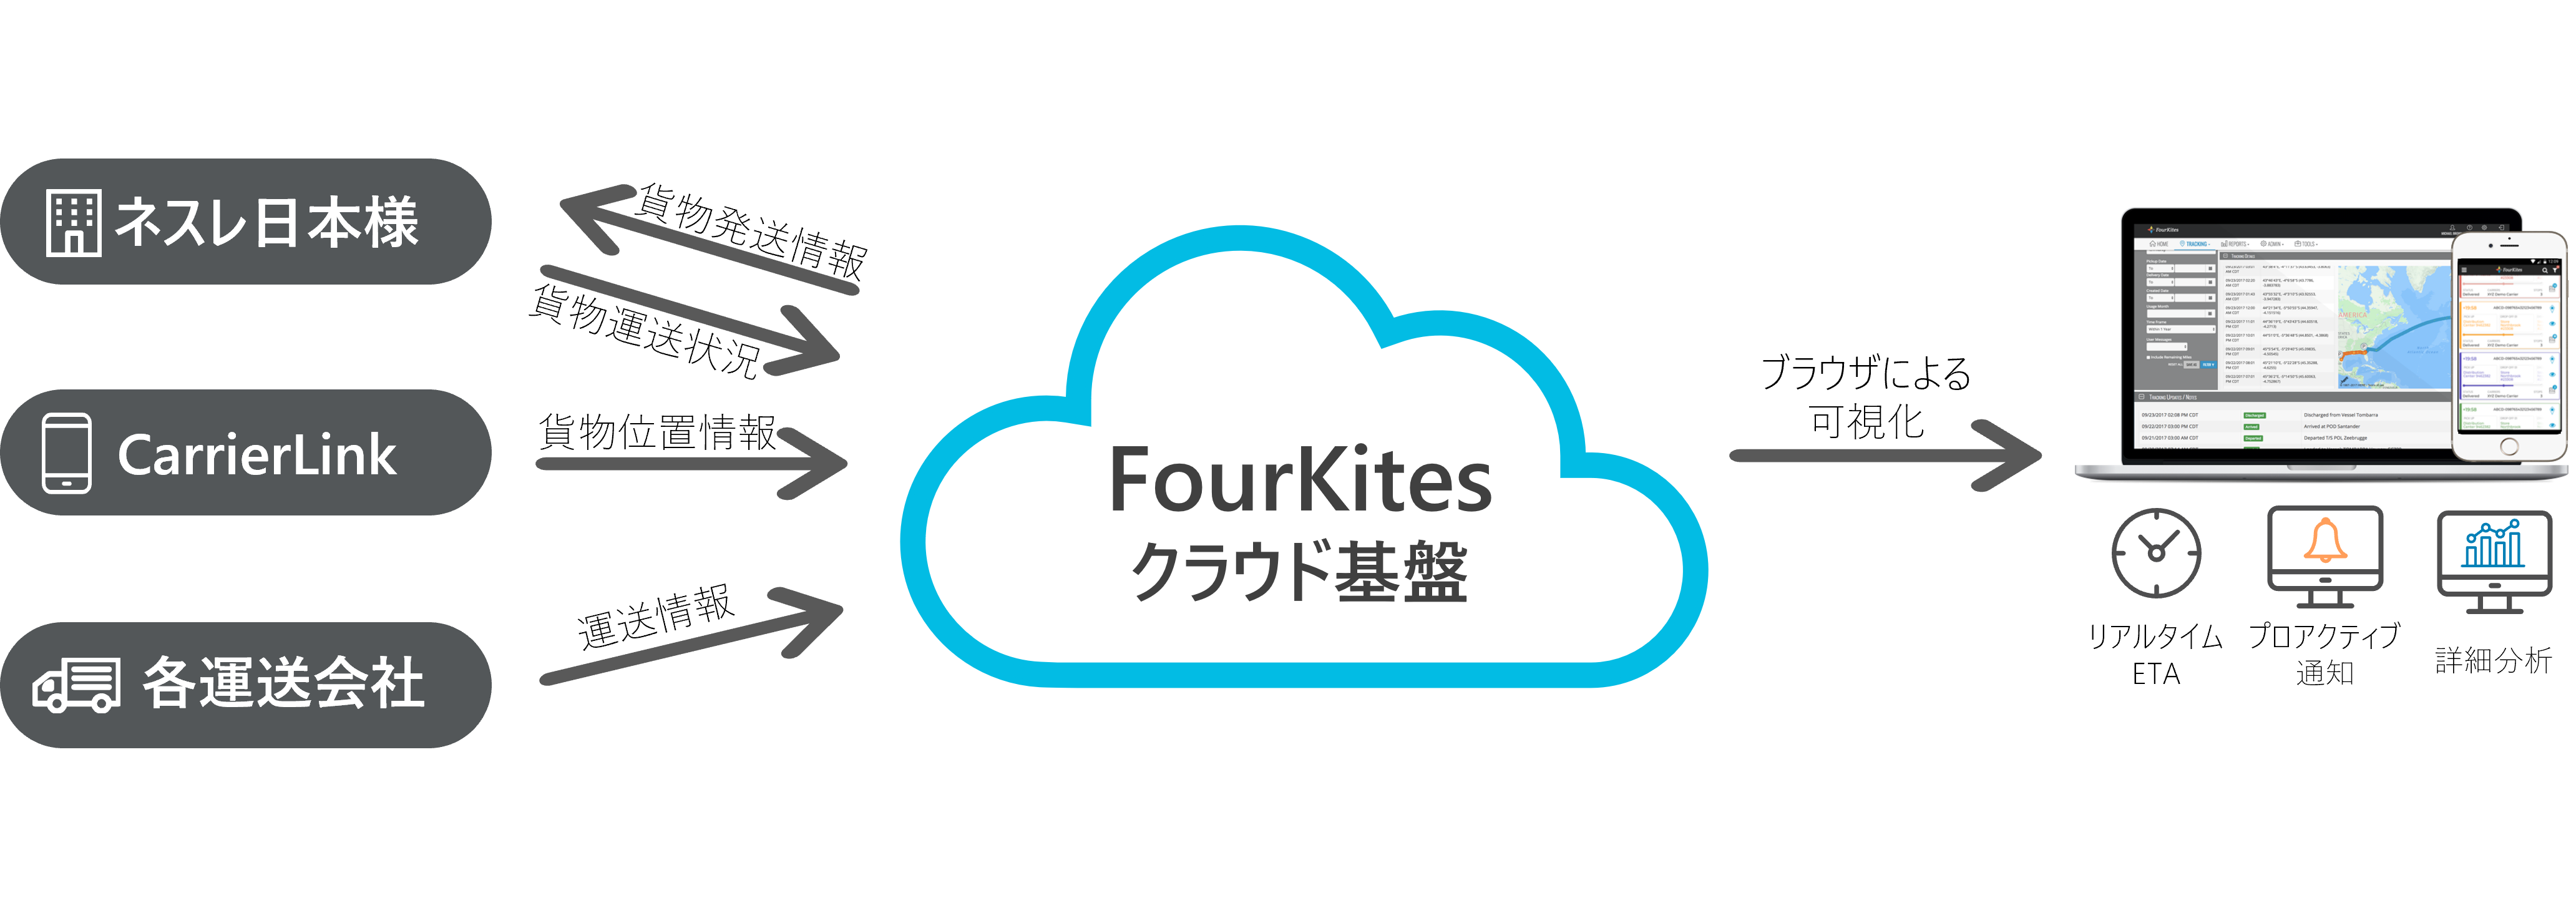 FourKites利用イメージ図